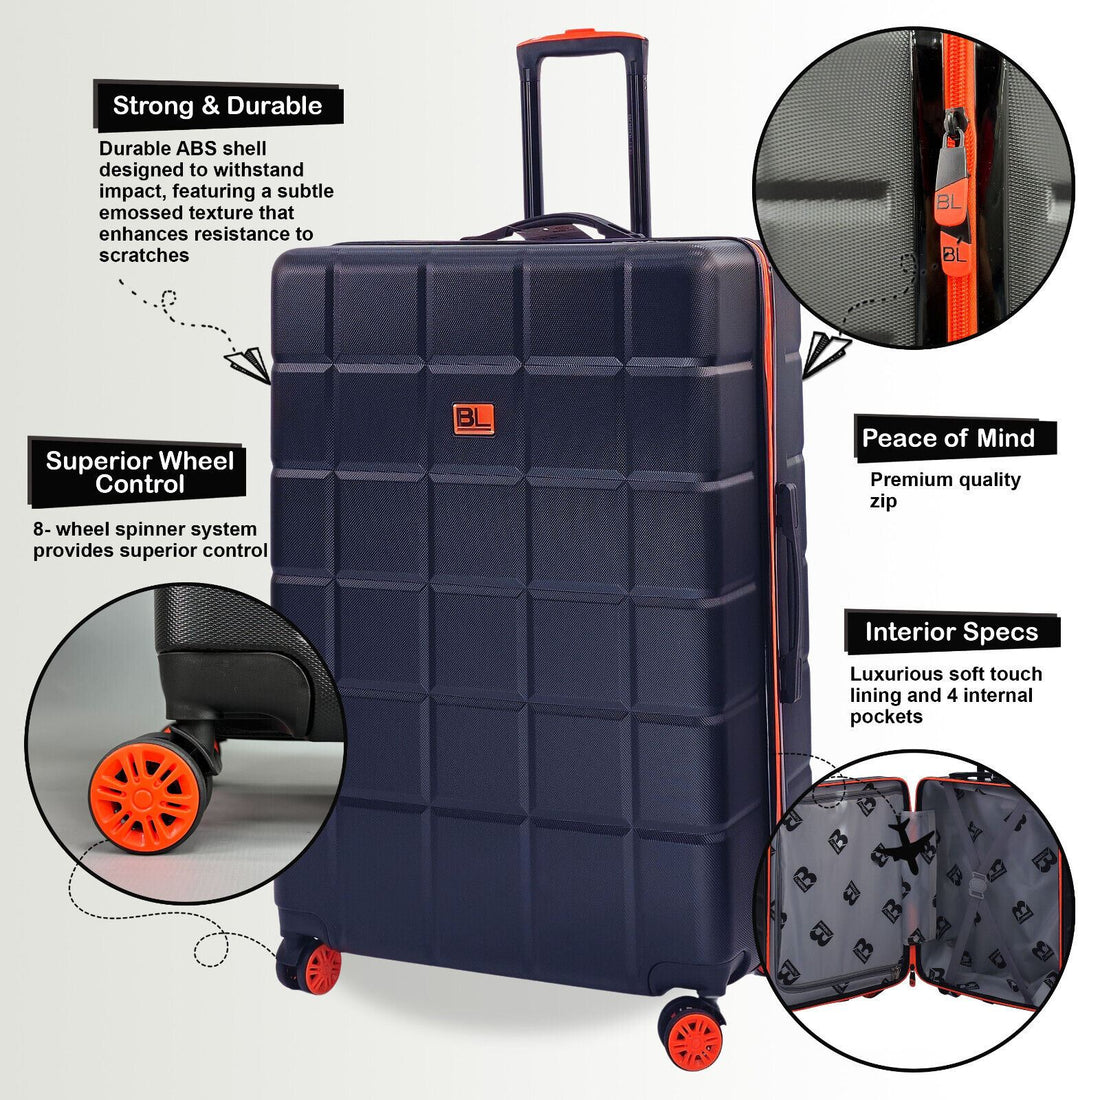 Collinsville Medium Soft Shell Suitcase in Black